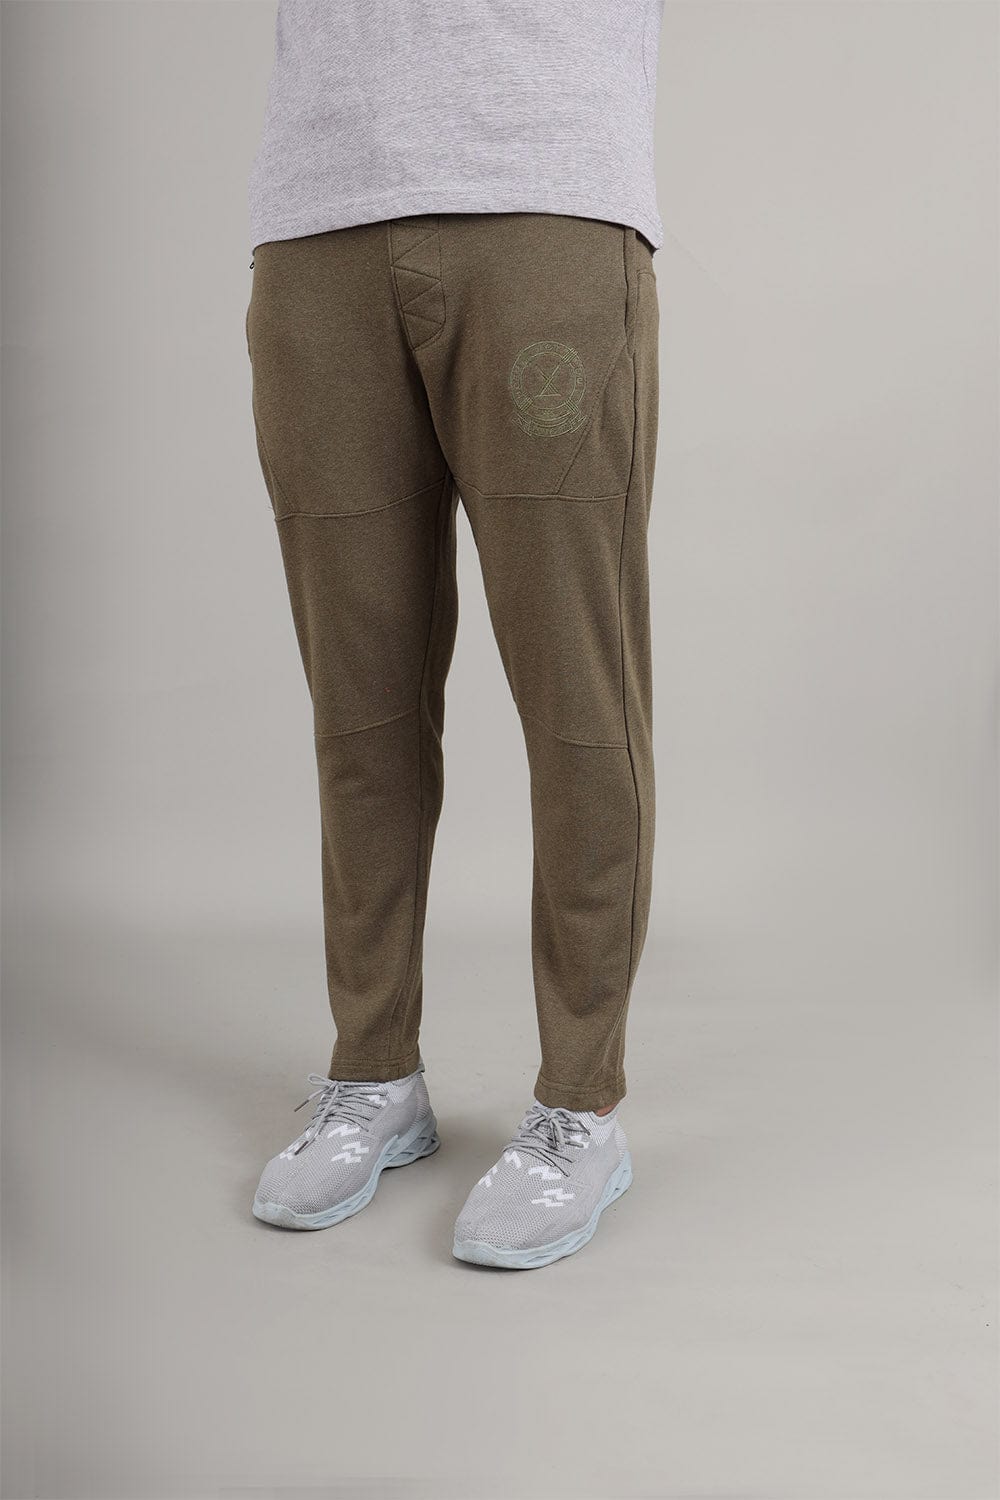 Hope Not Out by Shahid Afridi Men Trouser Premium BIker Stitch Trouser